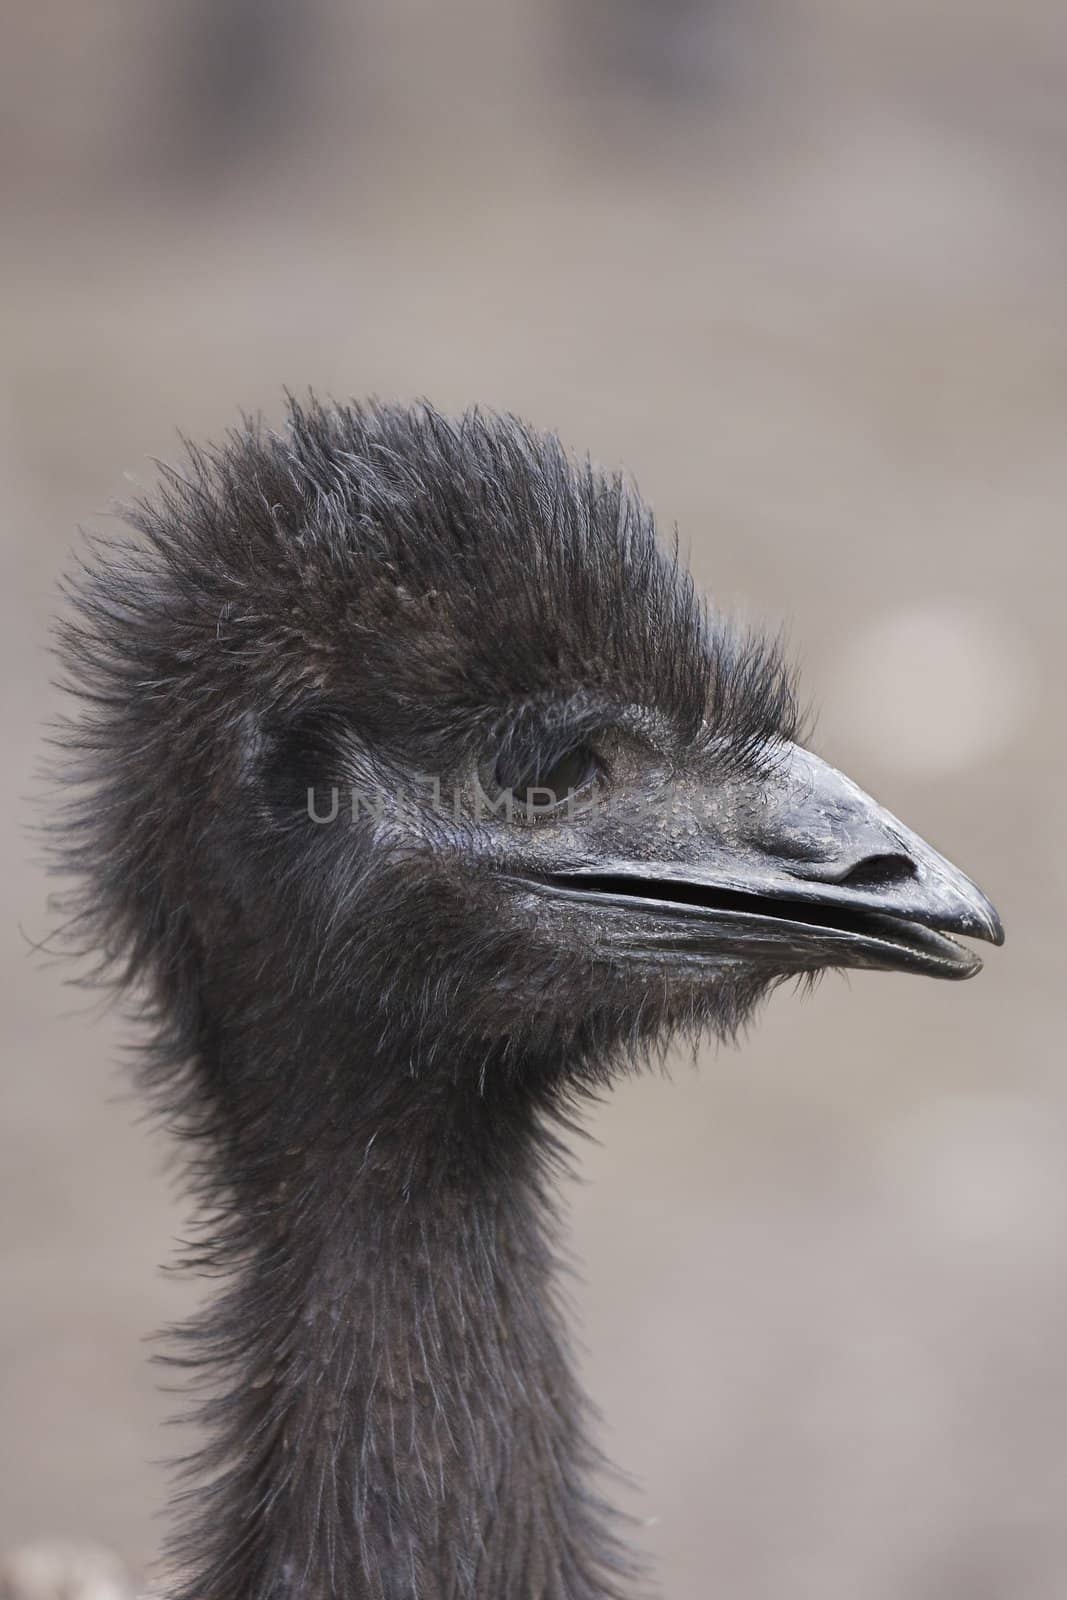 Young Emu by Meikey